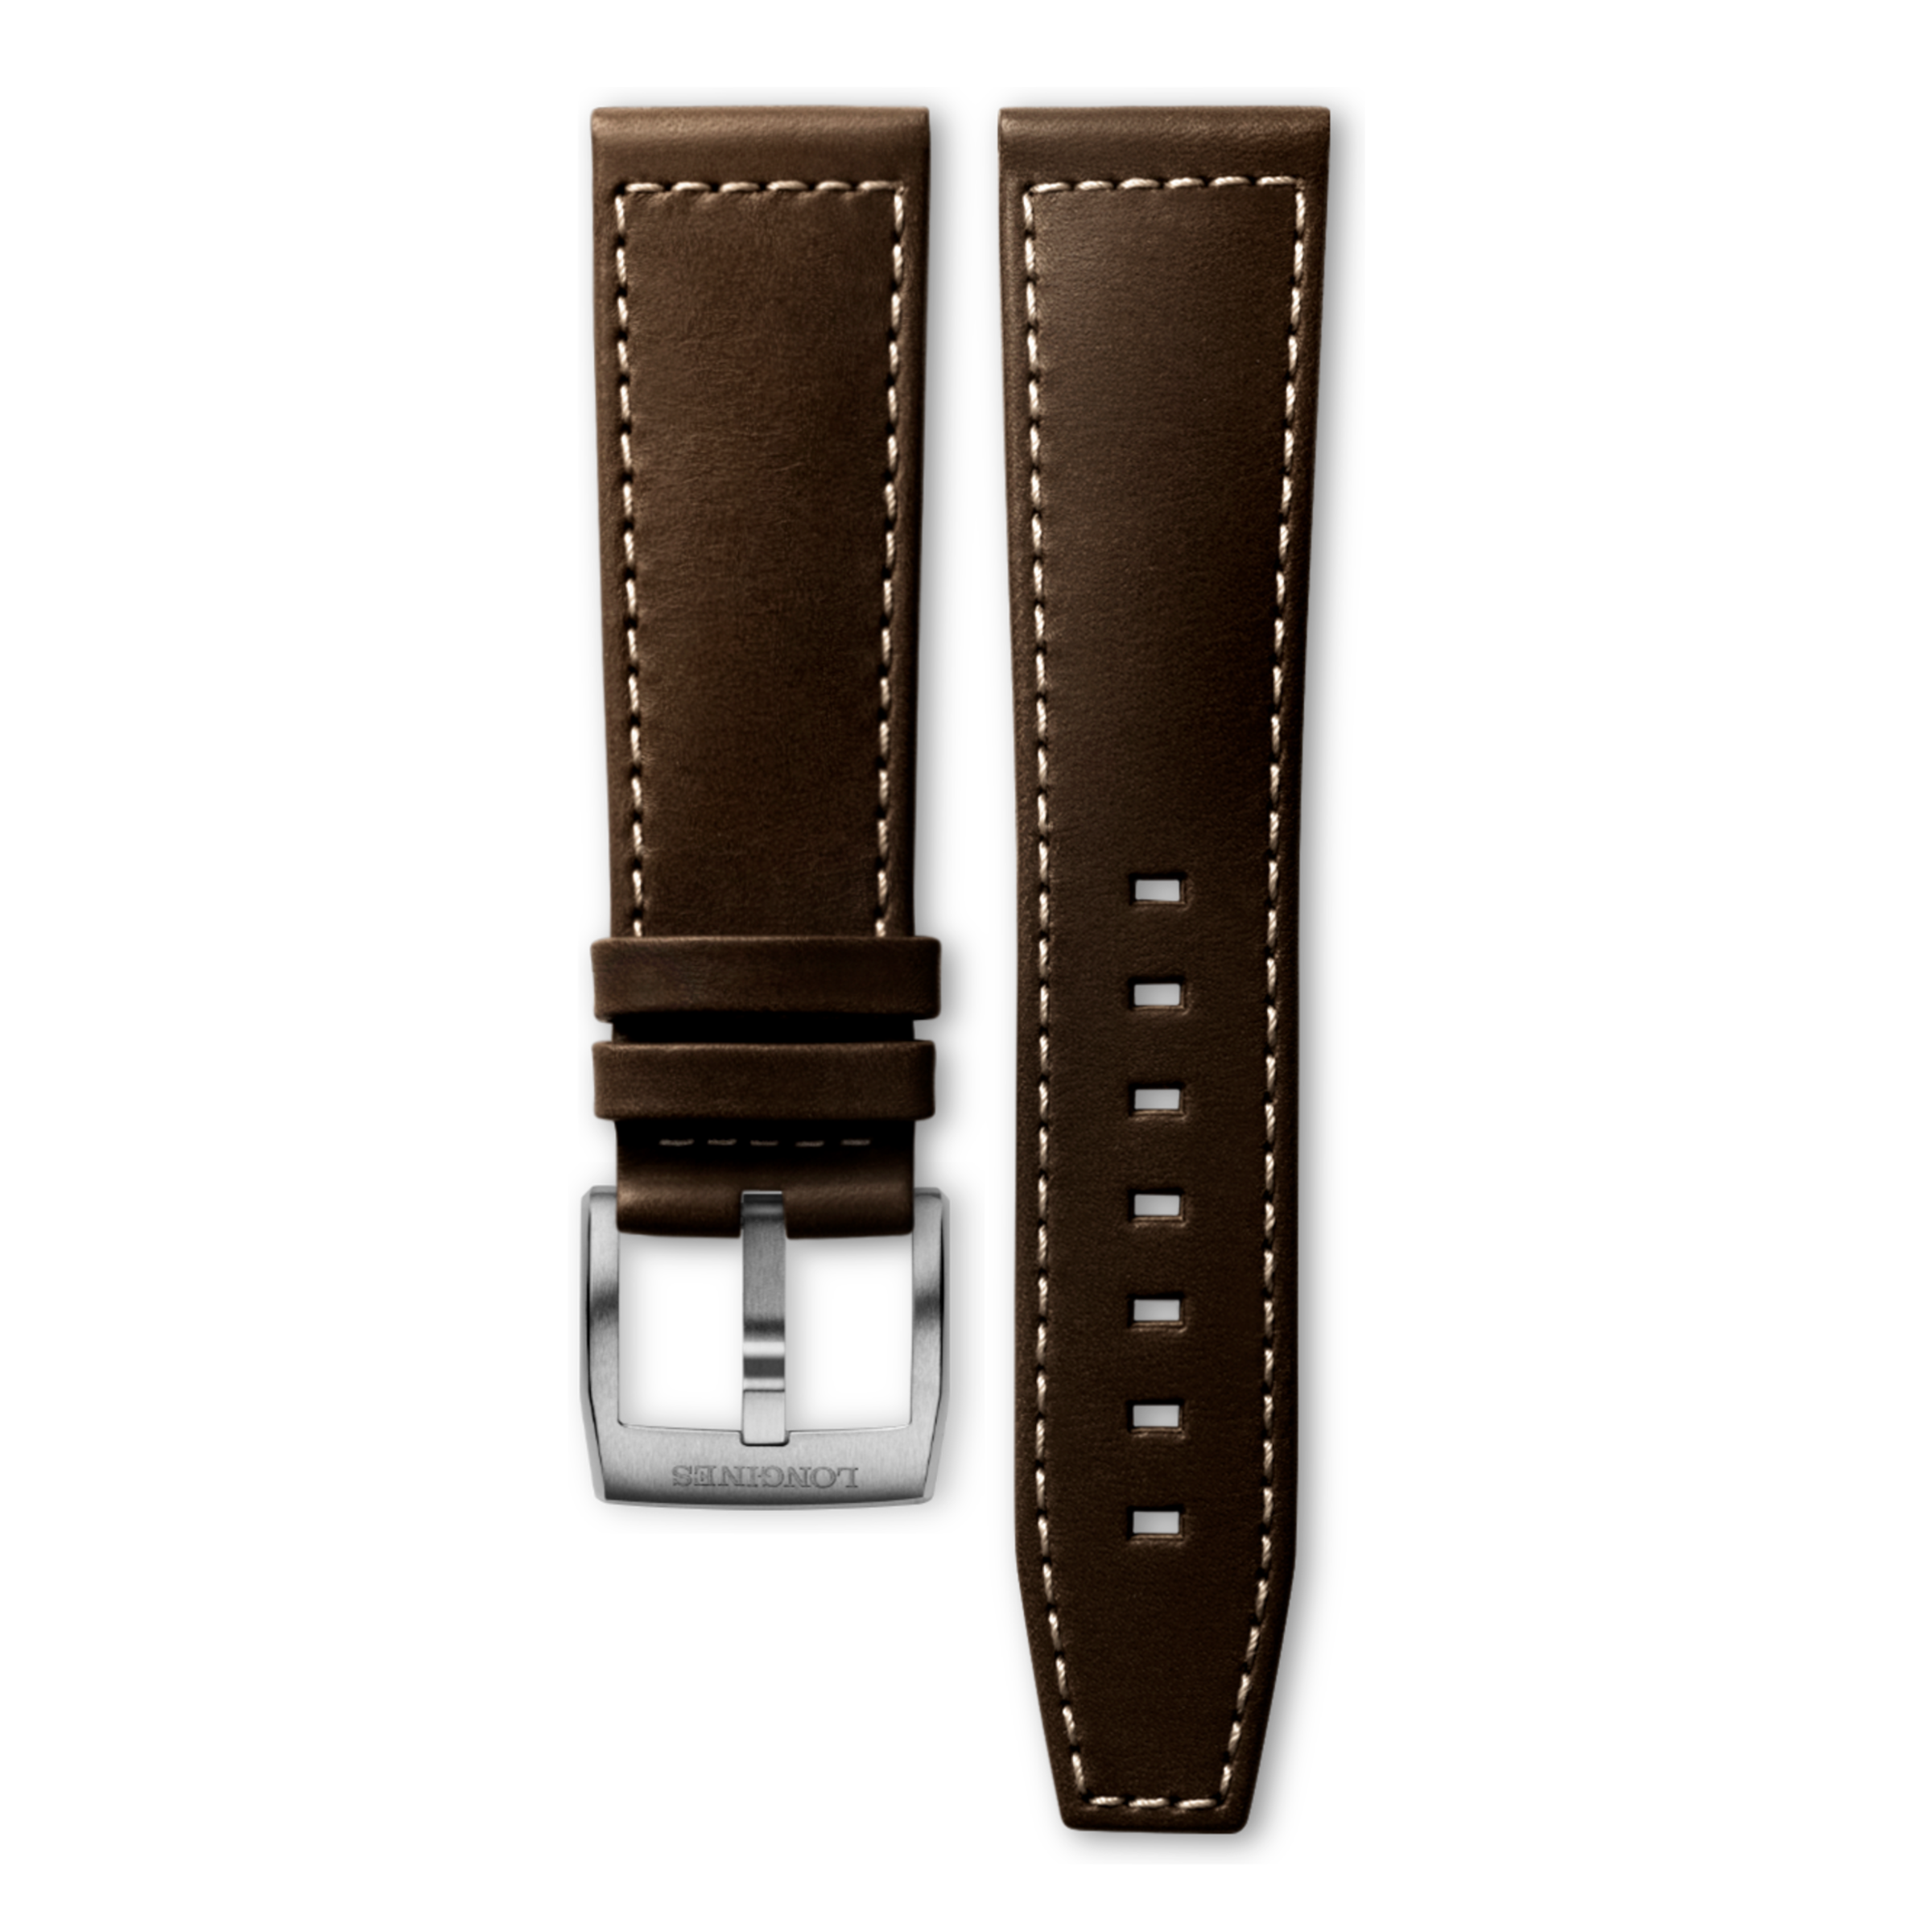 Semi matt dark brown calf leather strap